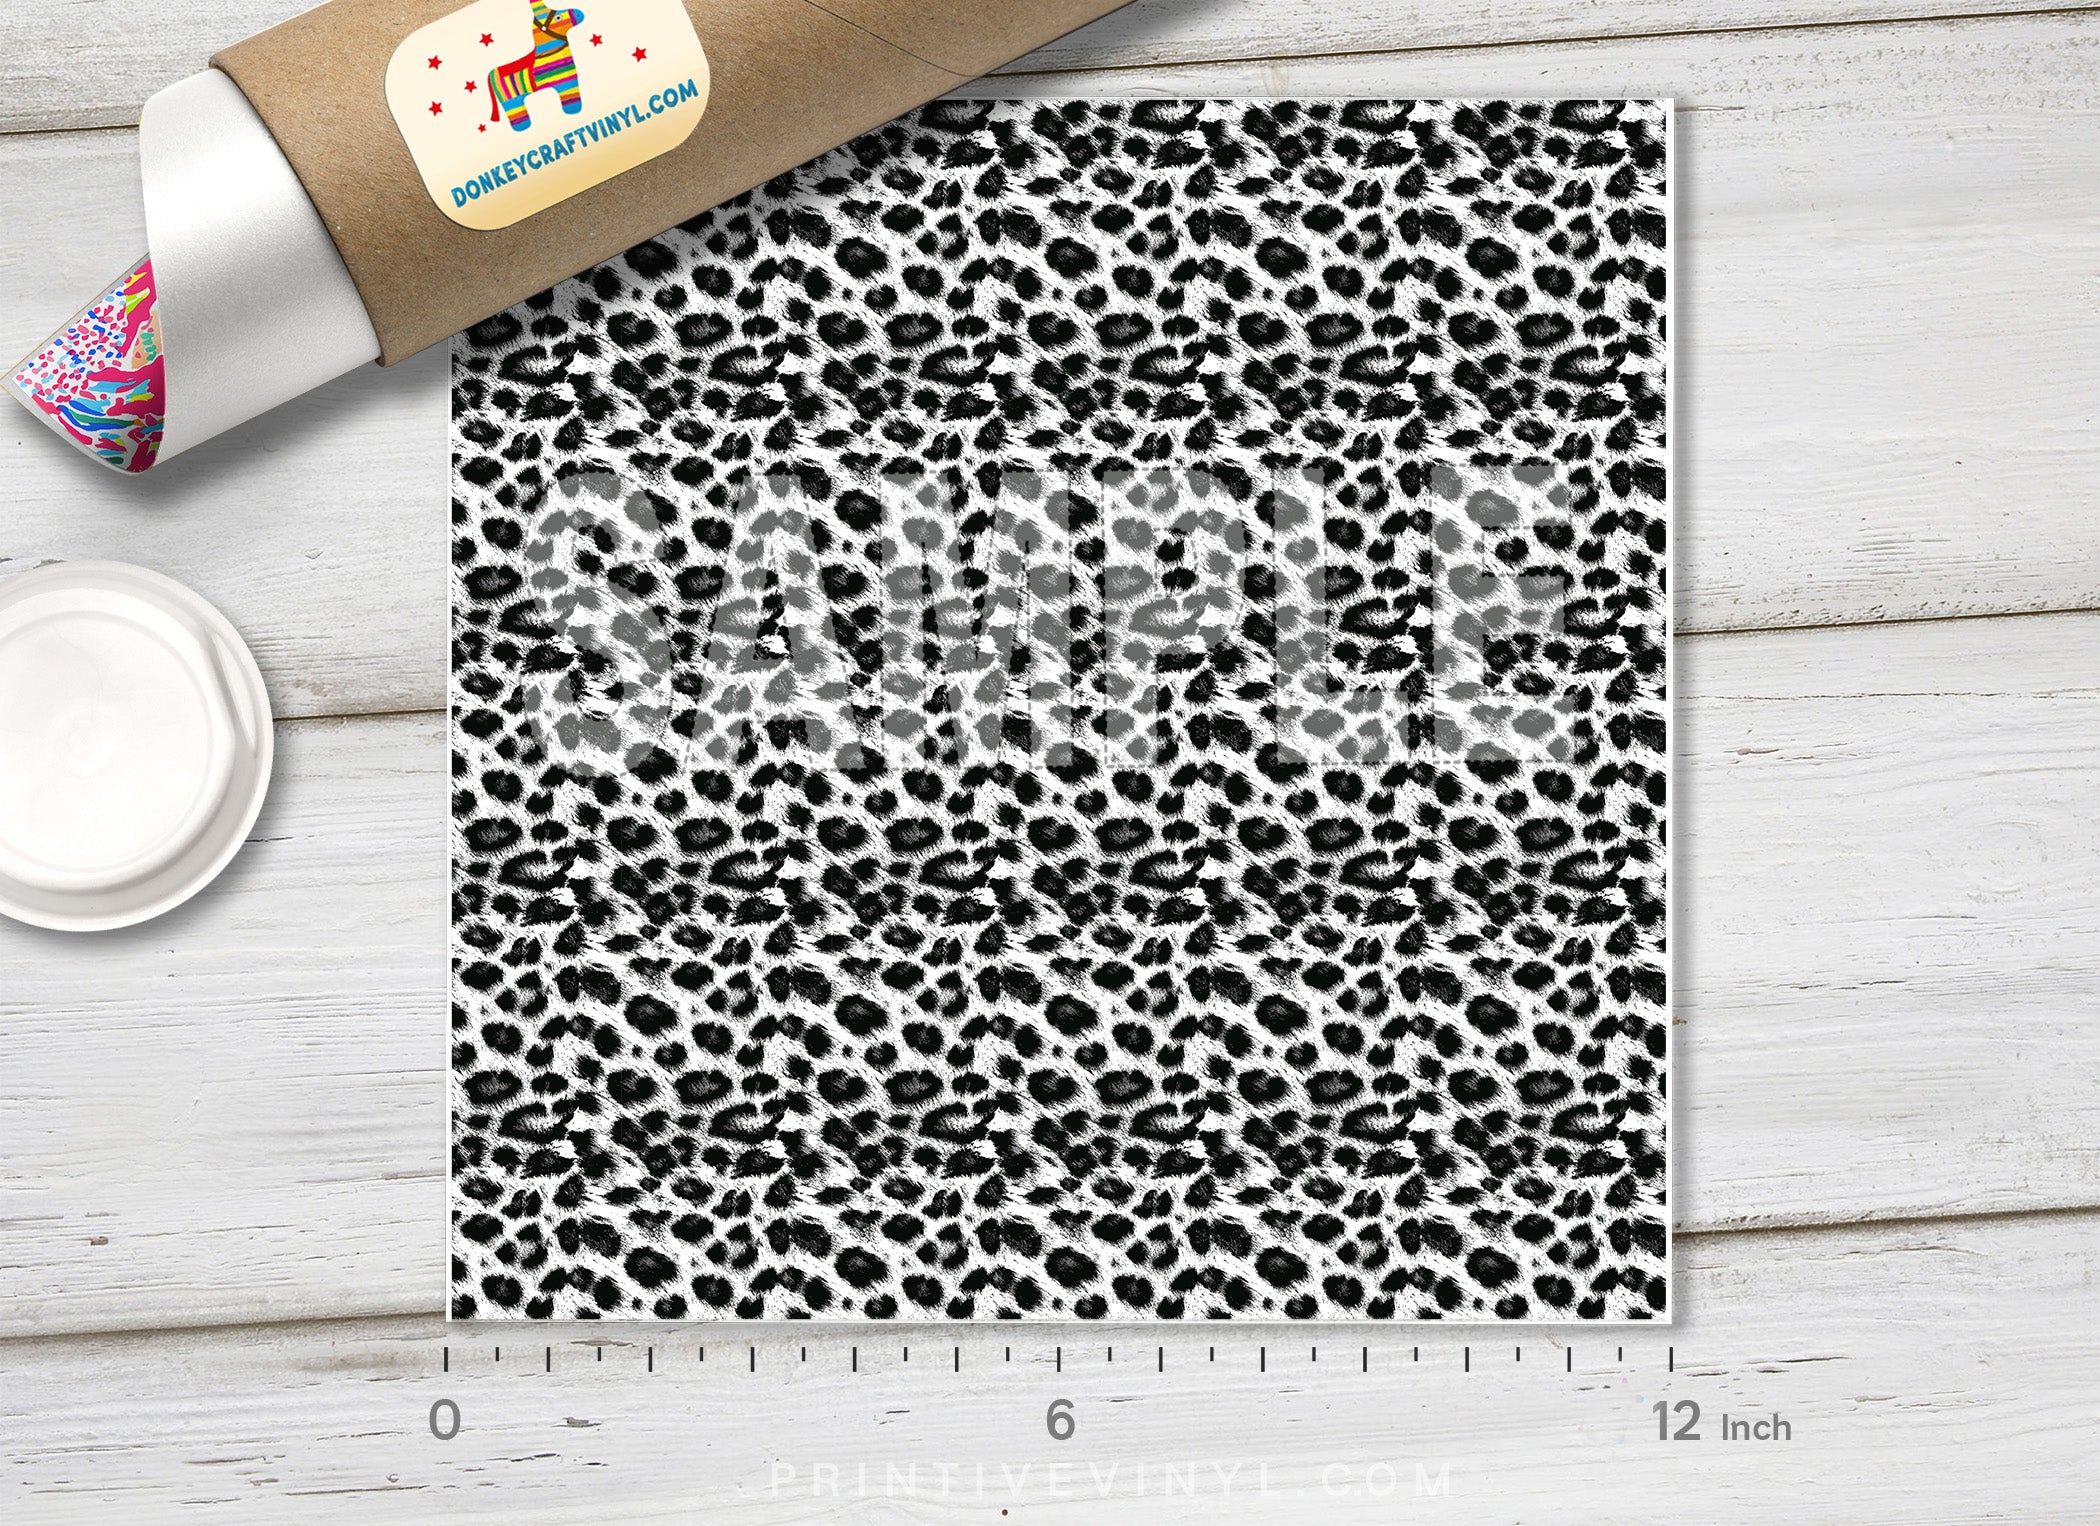 Leopard Patterned Adhesive Vinyl 712